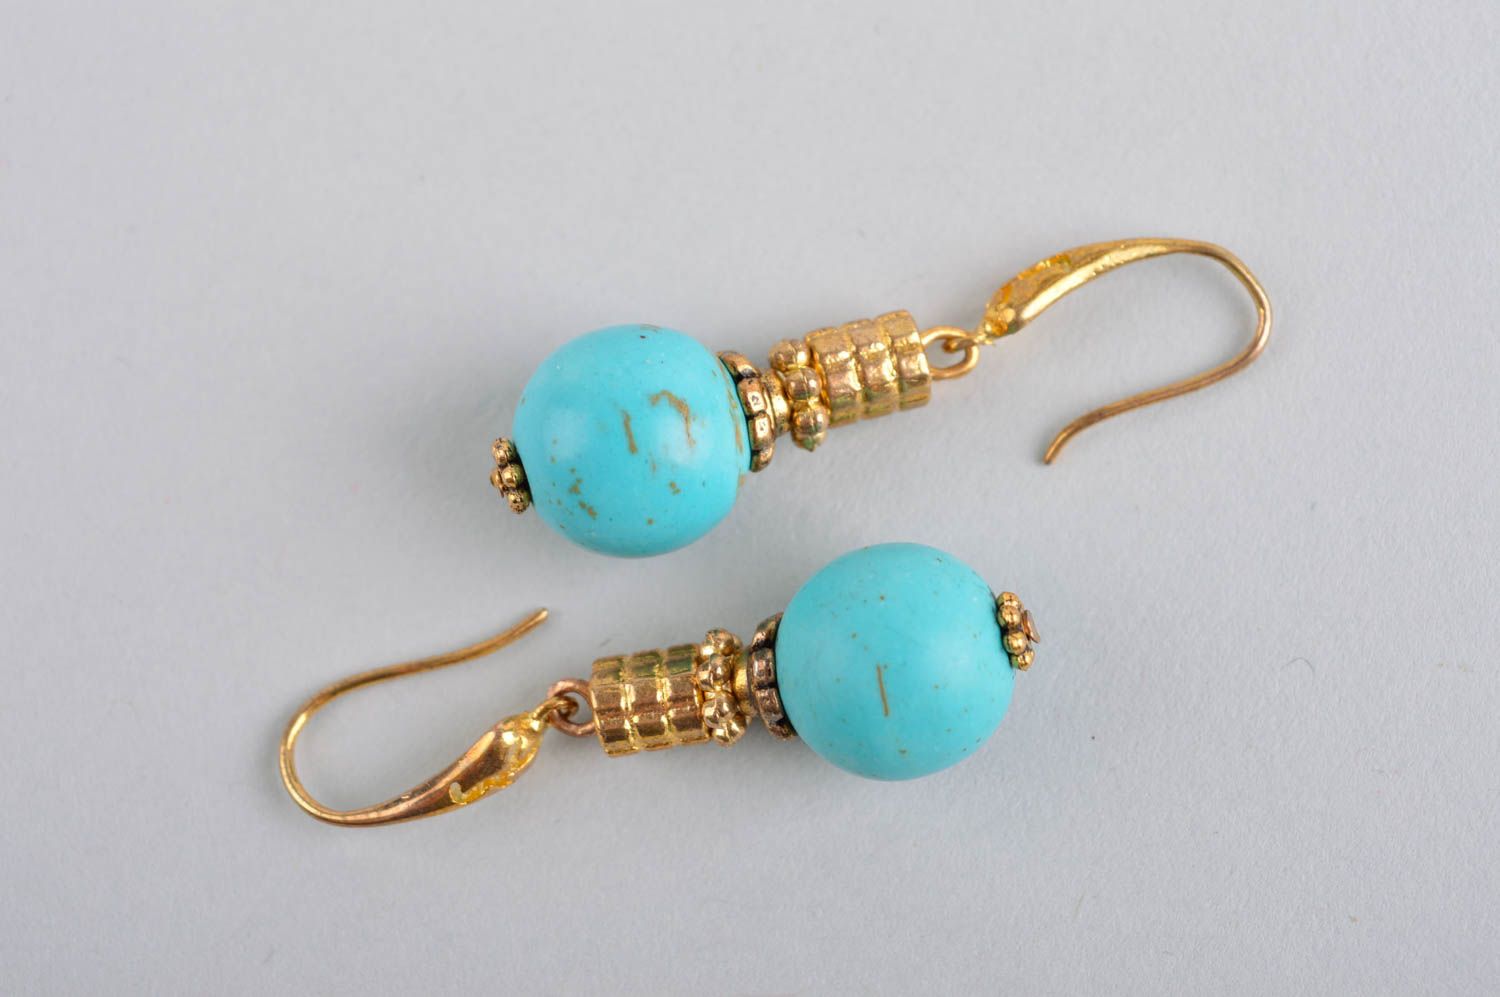 Handmade earrings designer jewelry turquoise earrings fashion accessories photo 5